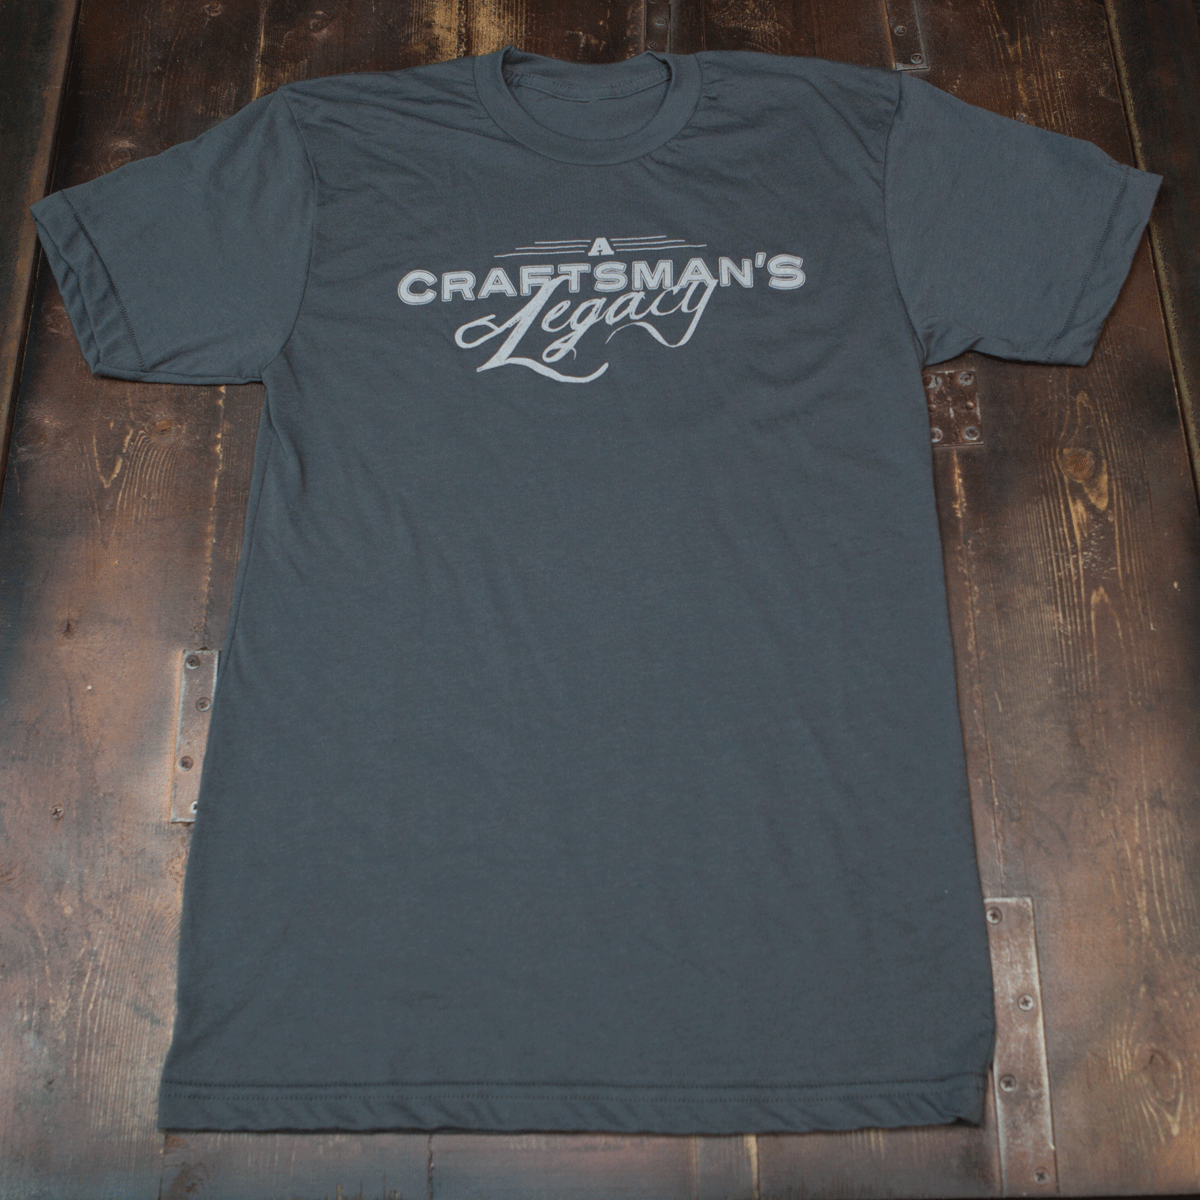 A Craftsman's Legacy, Tee Shirt